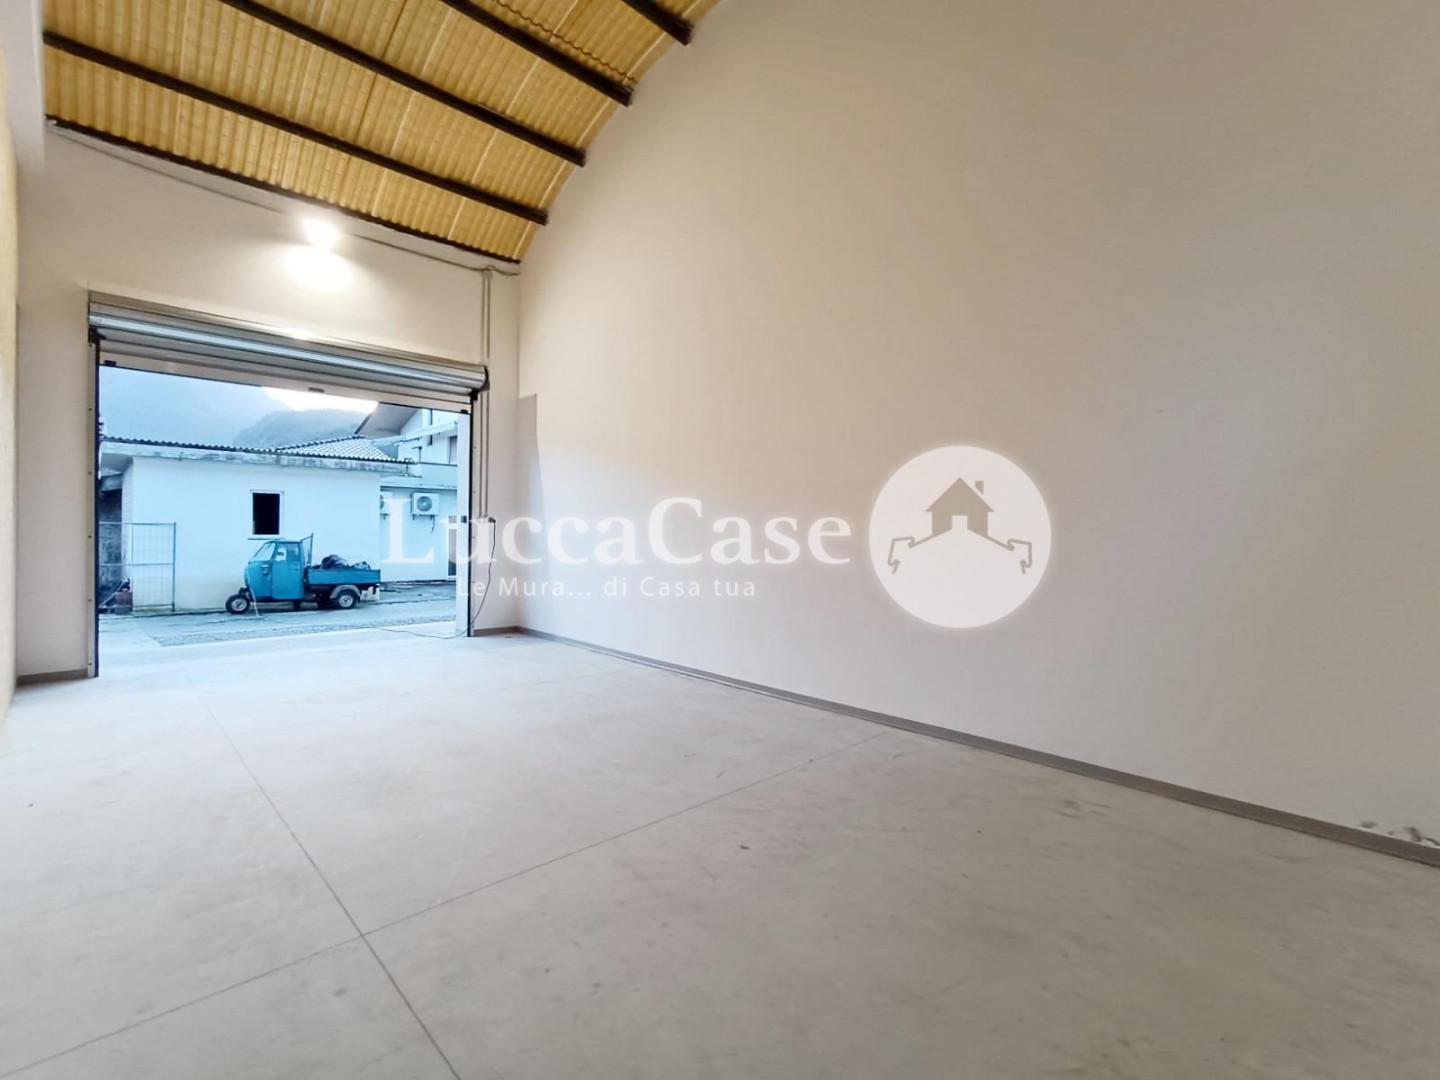 Warehouse for commercial rentals in Coreglia Antelminelli (LU)